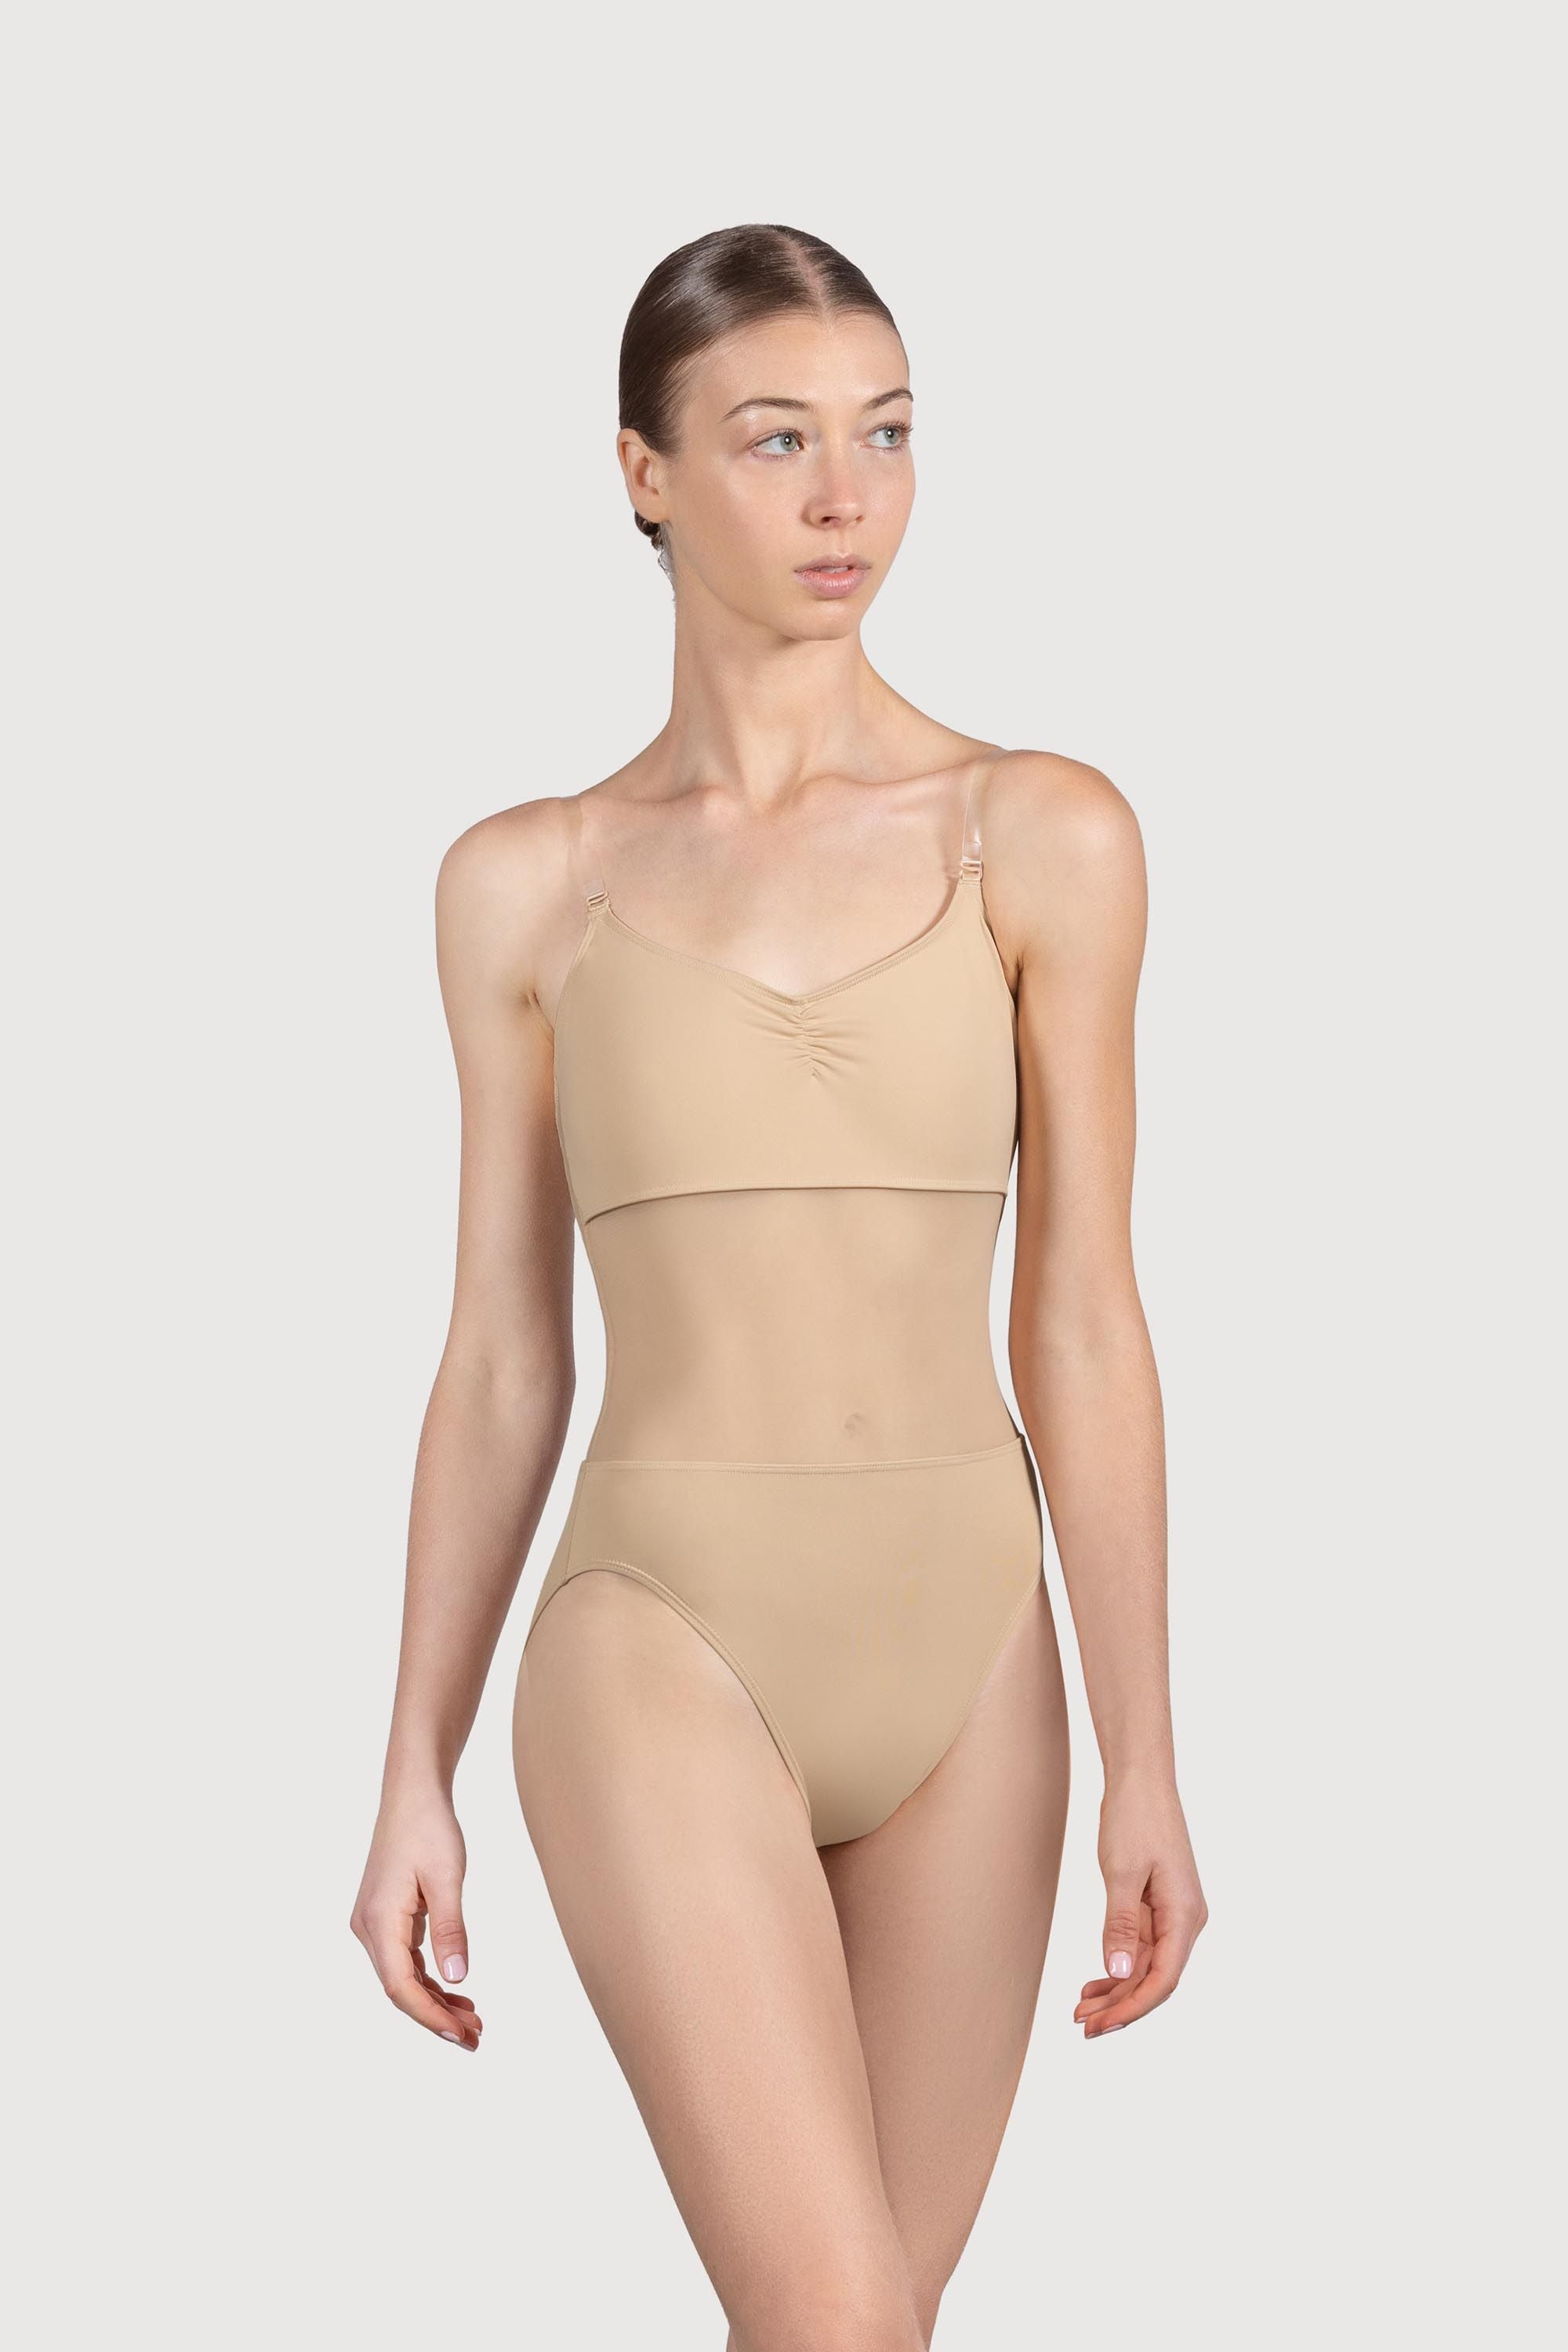 contrast-strap mesh bodysuit